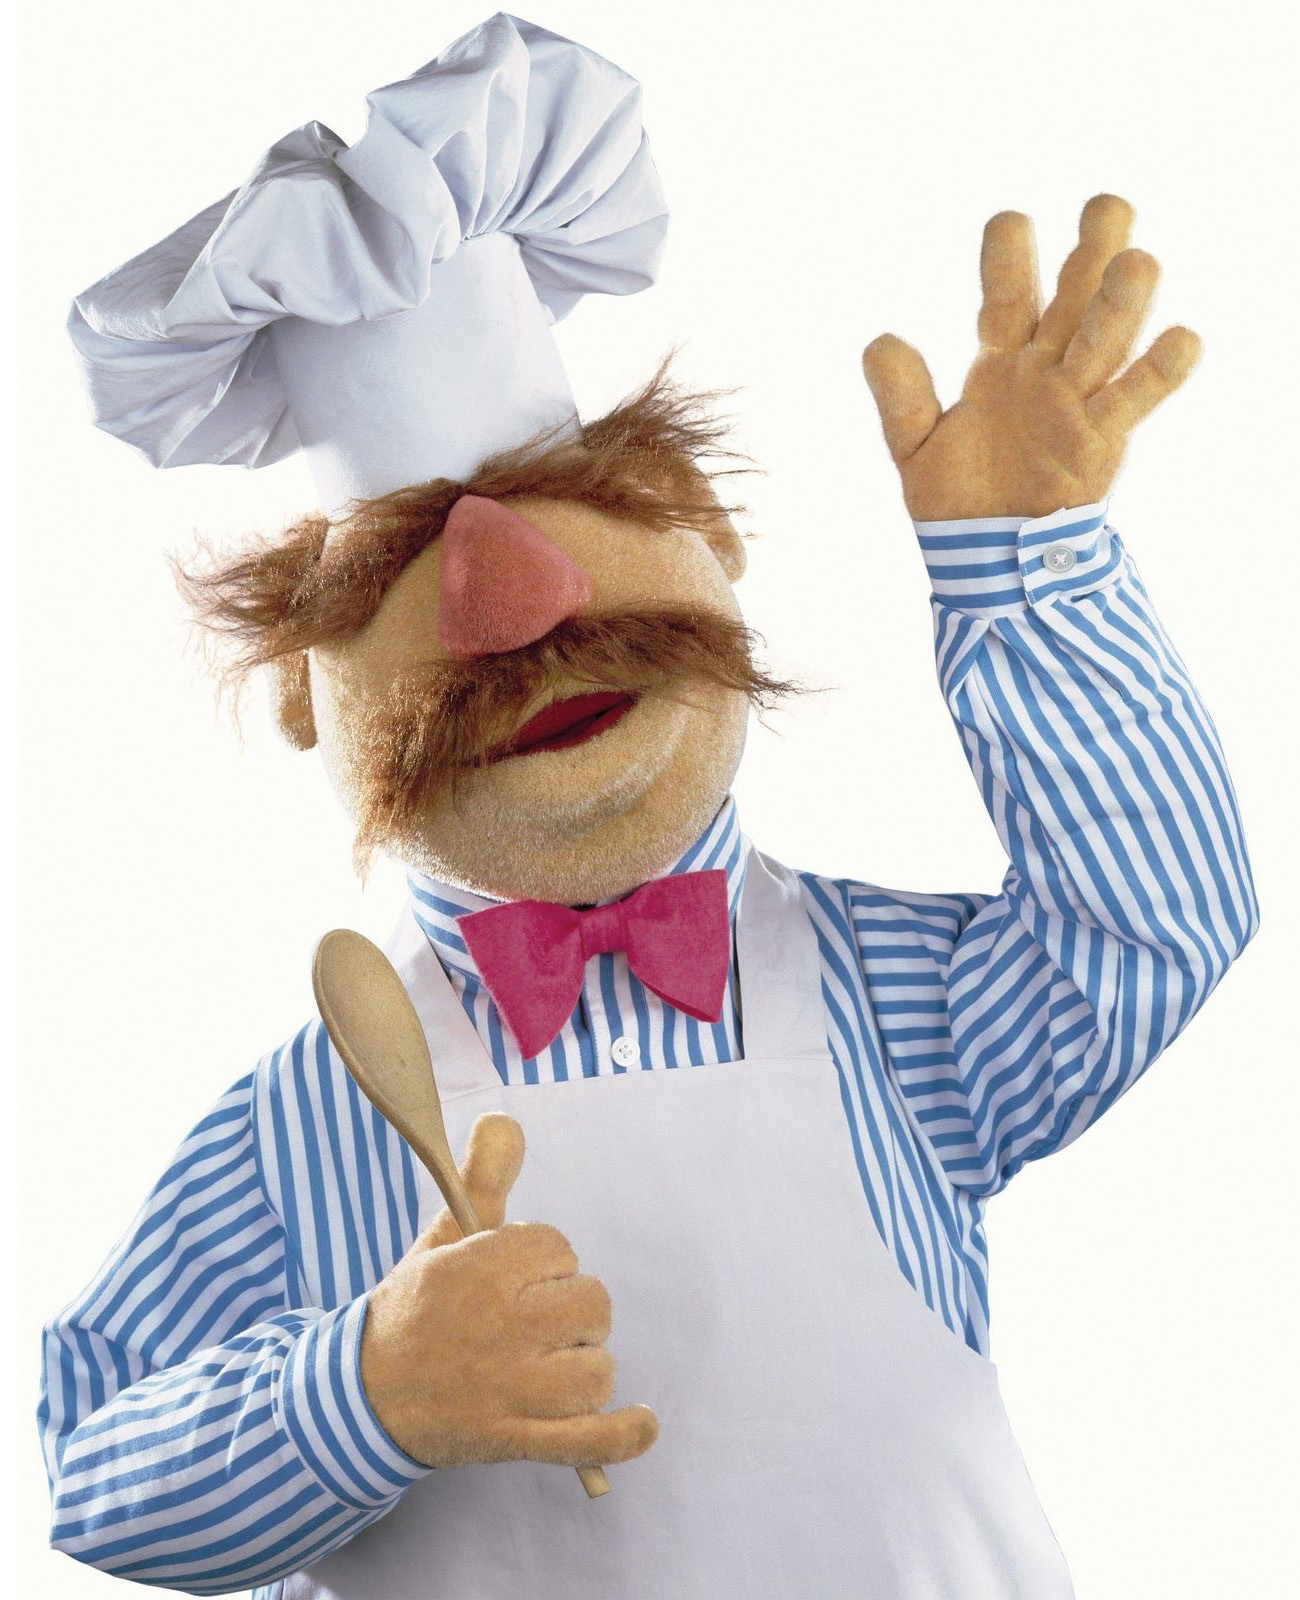 IMAGE(http://img1.wikia.nocookie.net/__cb20111104173207/muppet/images/4/41/Swedish-chef.jpg)